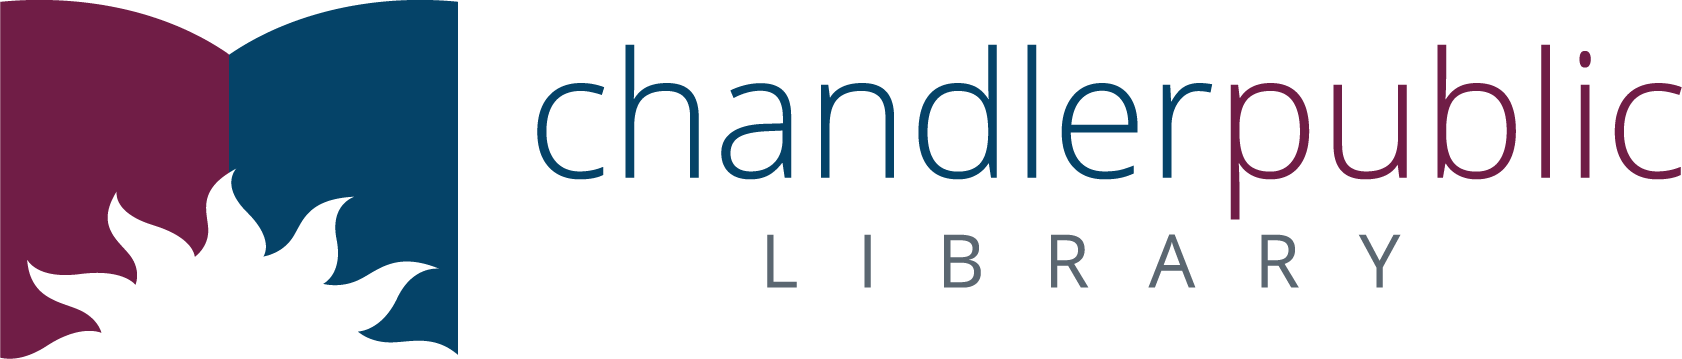 chandler library logo